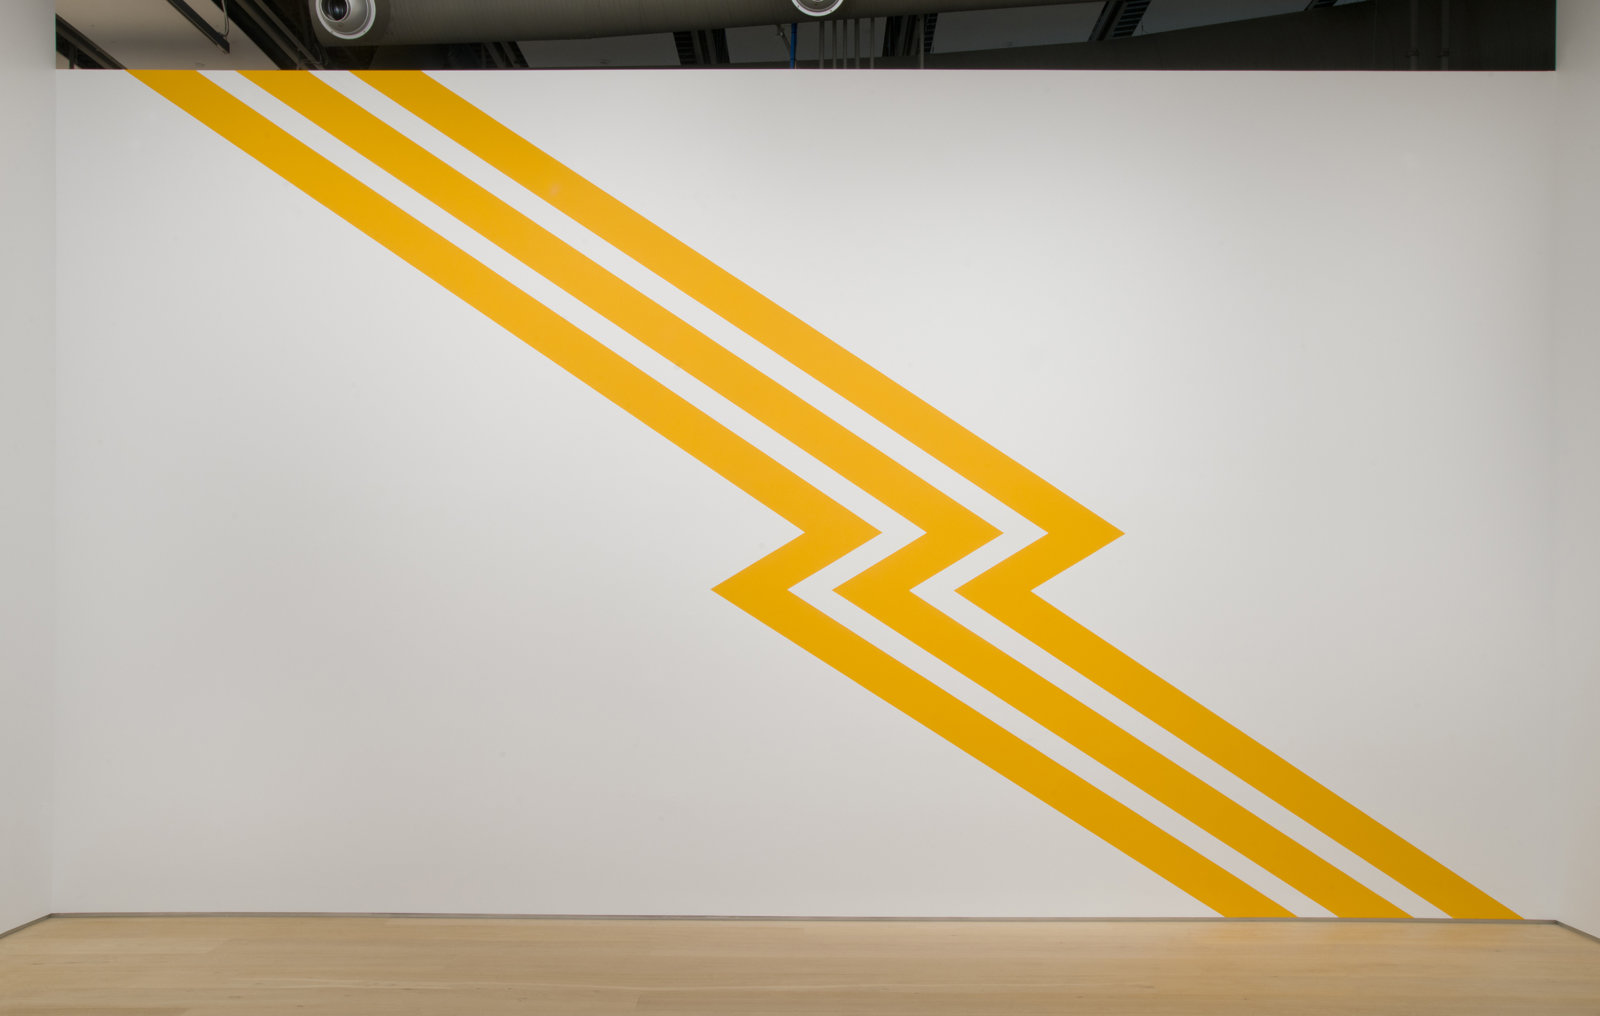 Duane Linklater, installation view, Learning, 2013, Esker Foundation, Calgary, 2014